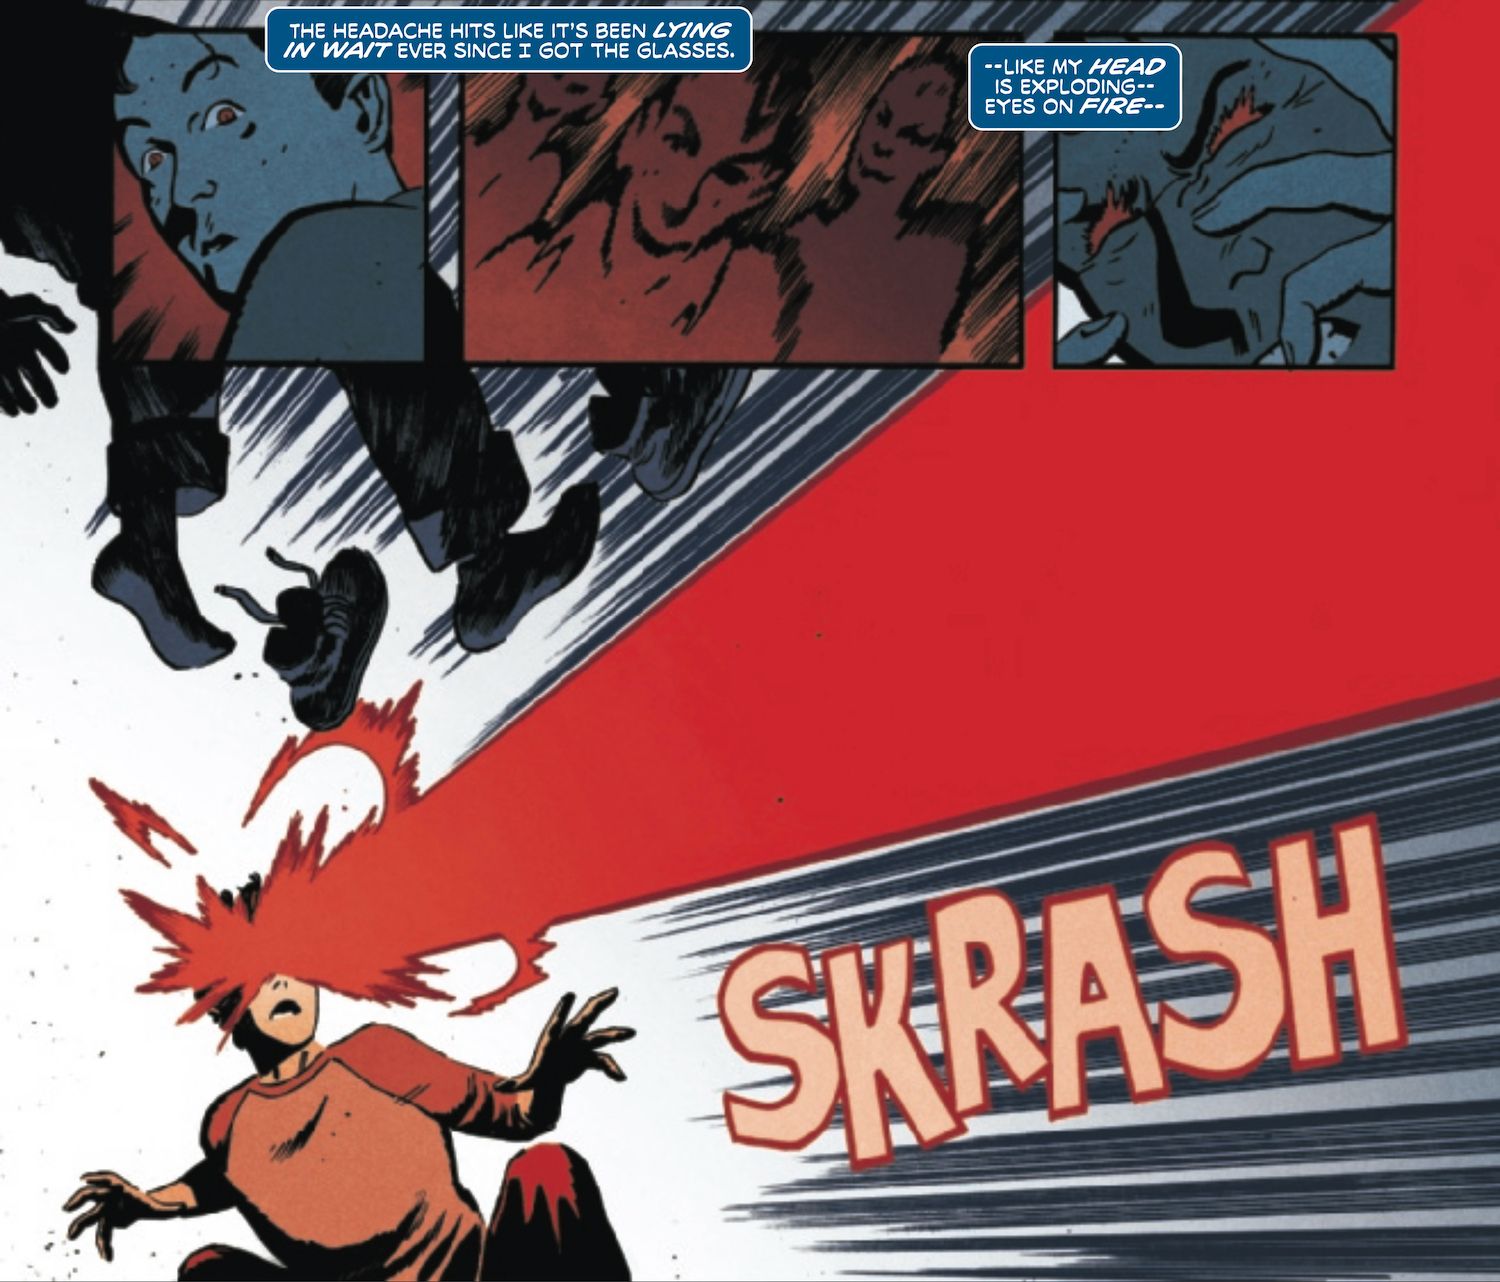 Cyclops shoots optical blasts in a comic.